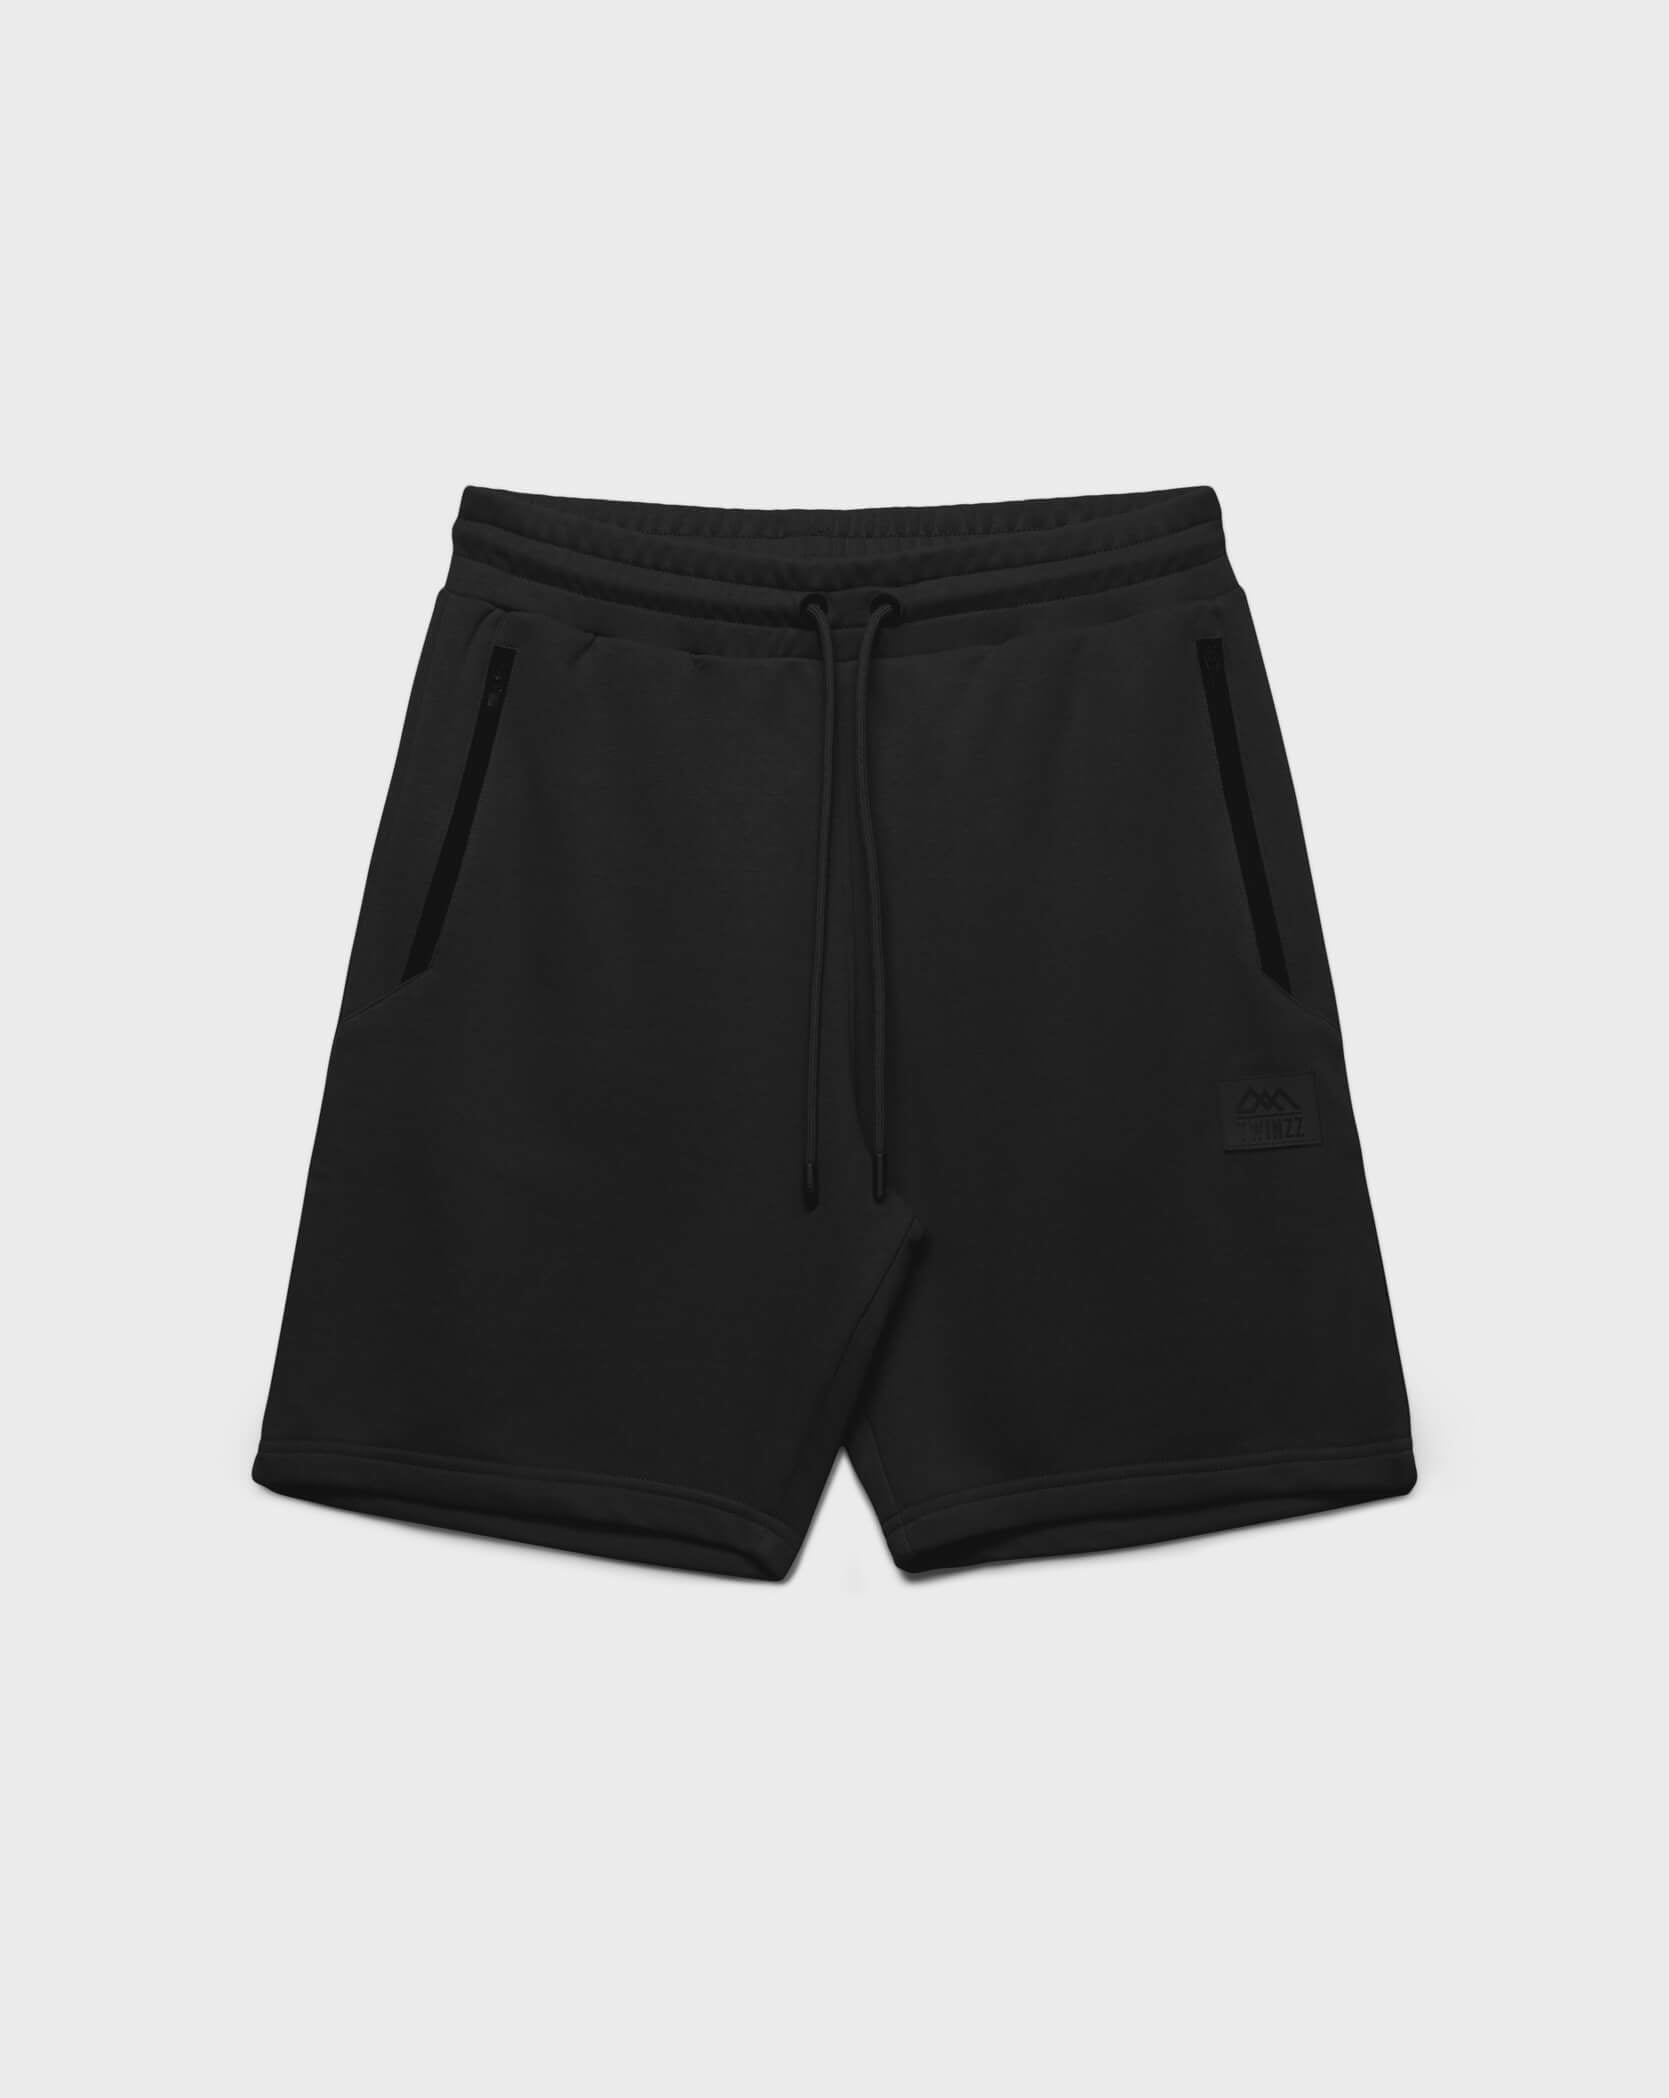 Twinzz black lifestyle shorts